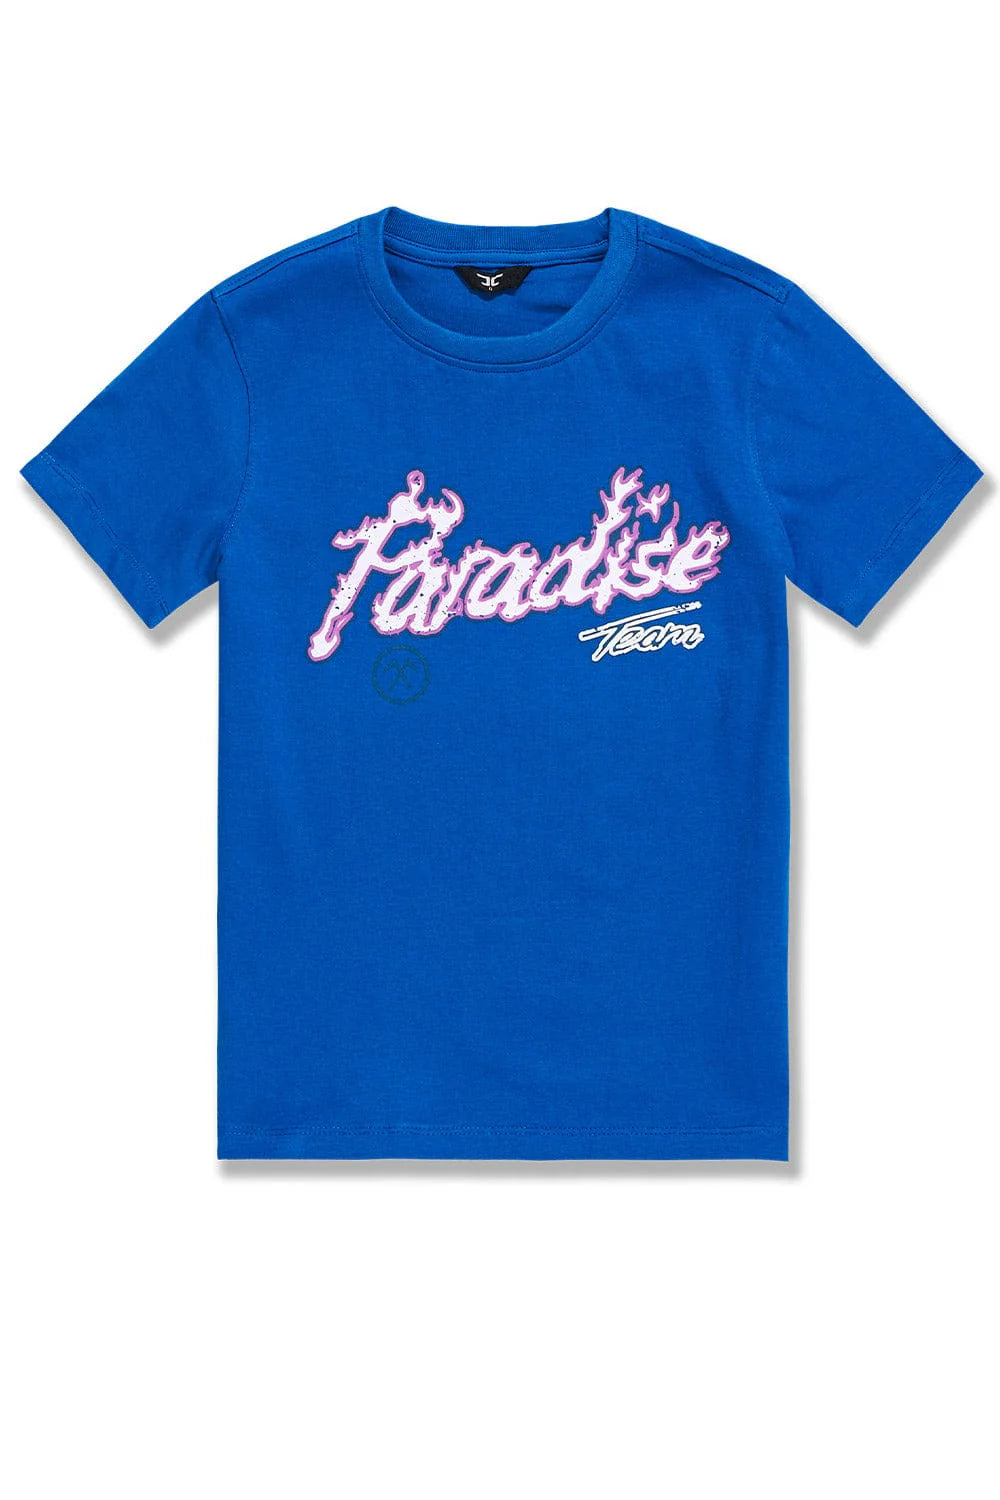 Jordan Craig -Kids Paradise Tour T-Shirt -Royal Blue